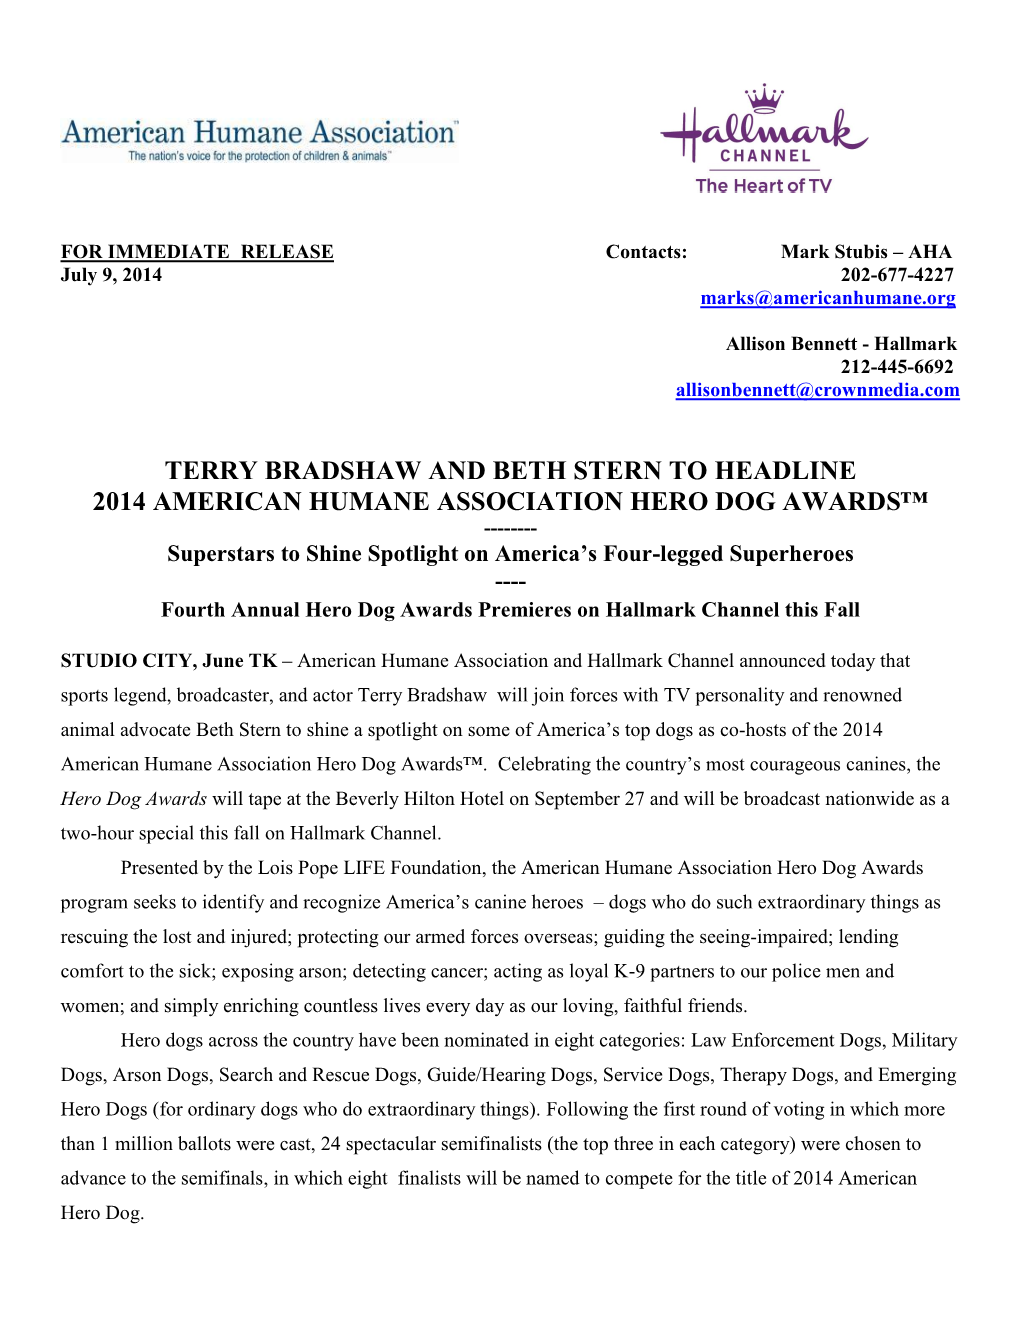 Terry Bradshaw and Beth Stern to Headline 2014 American Humane Association Hero Dog Awards